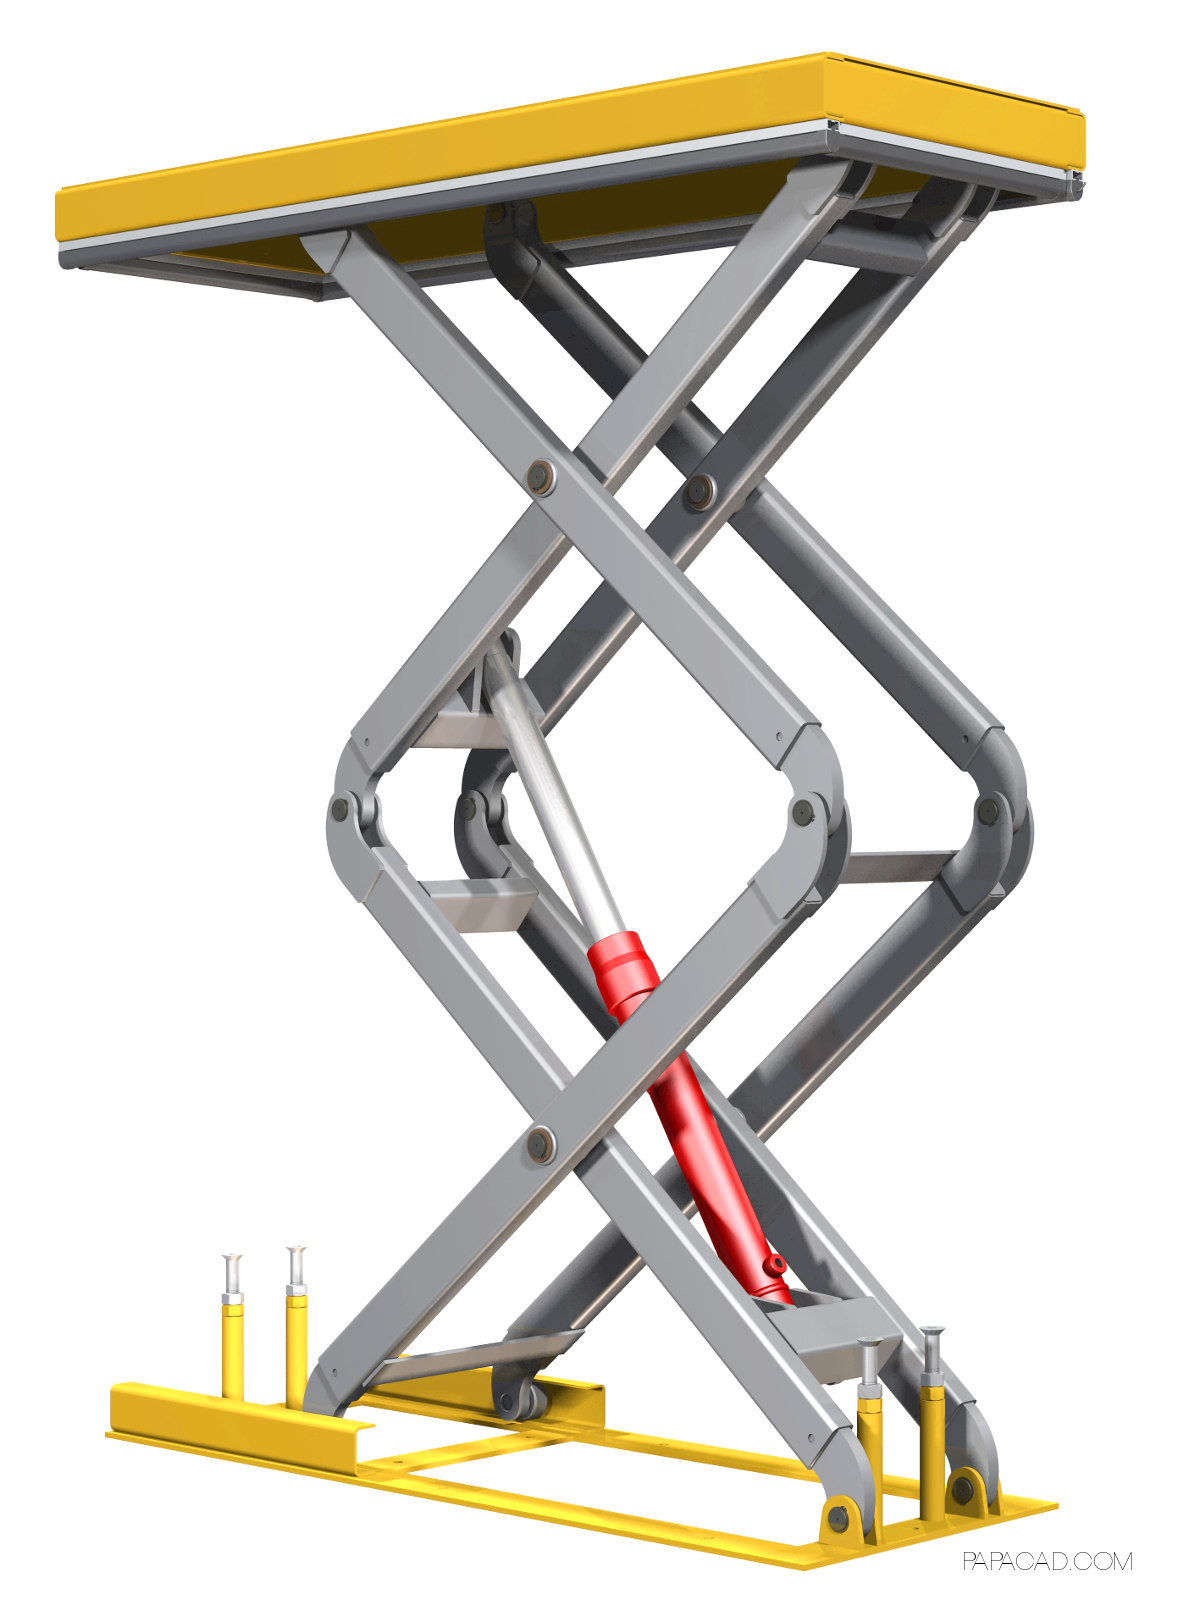 Best ideas about DIY Scissor Lift Table
. Save or Pin Scissor lift table plans 1000kg DIY Scissor lift table Now.